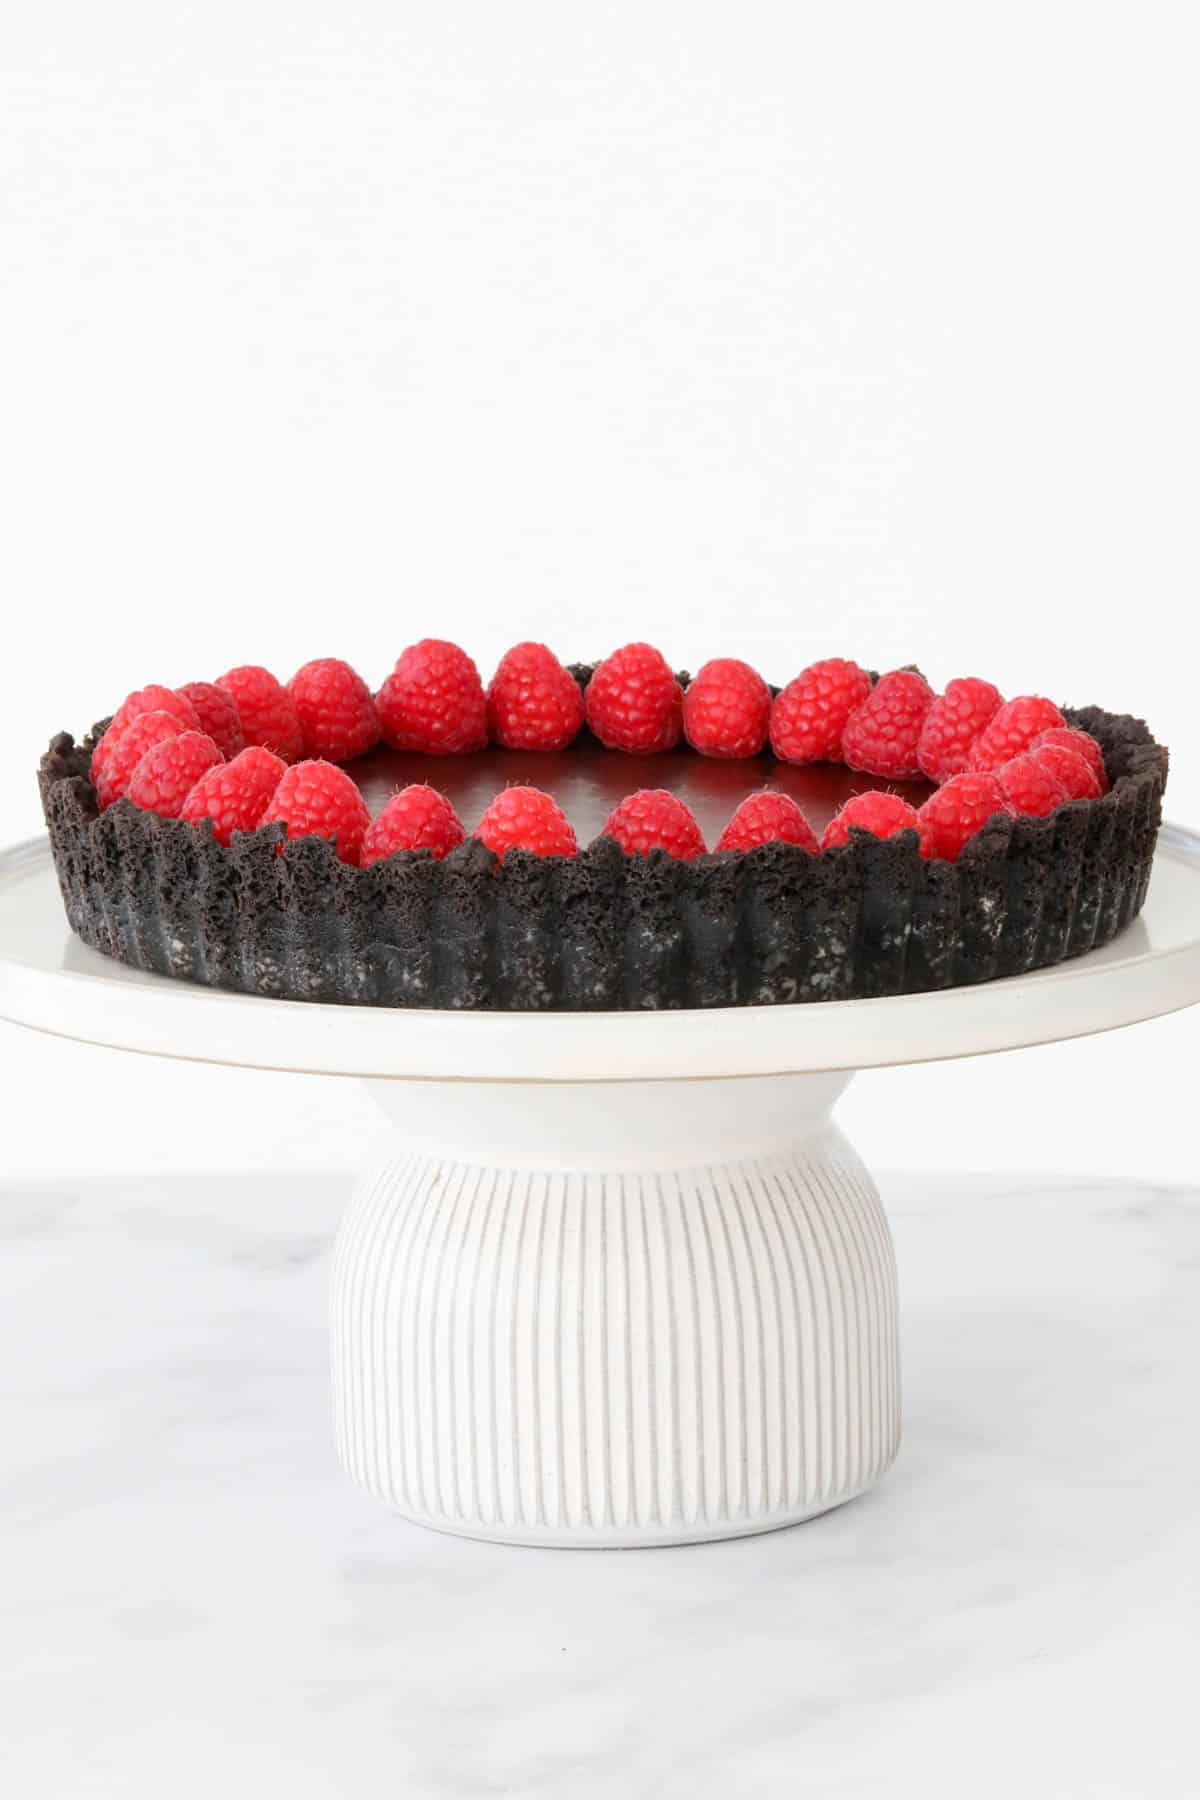 Chocolate ganache and raspberry tart on a cake stand.